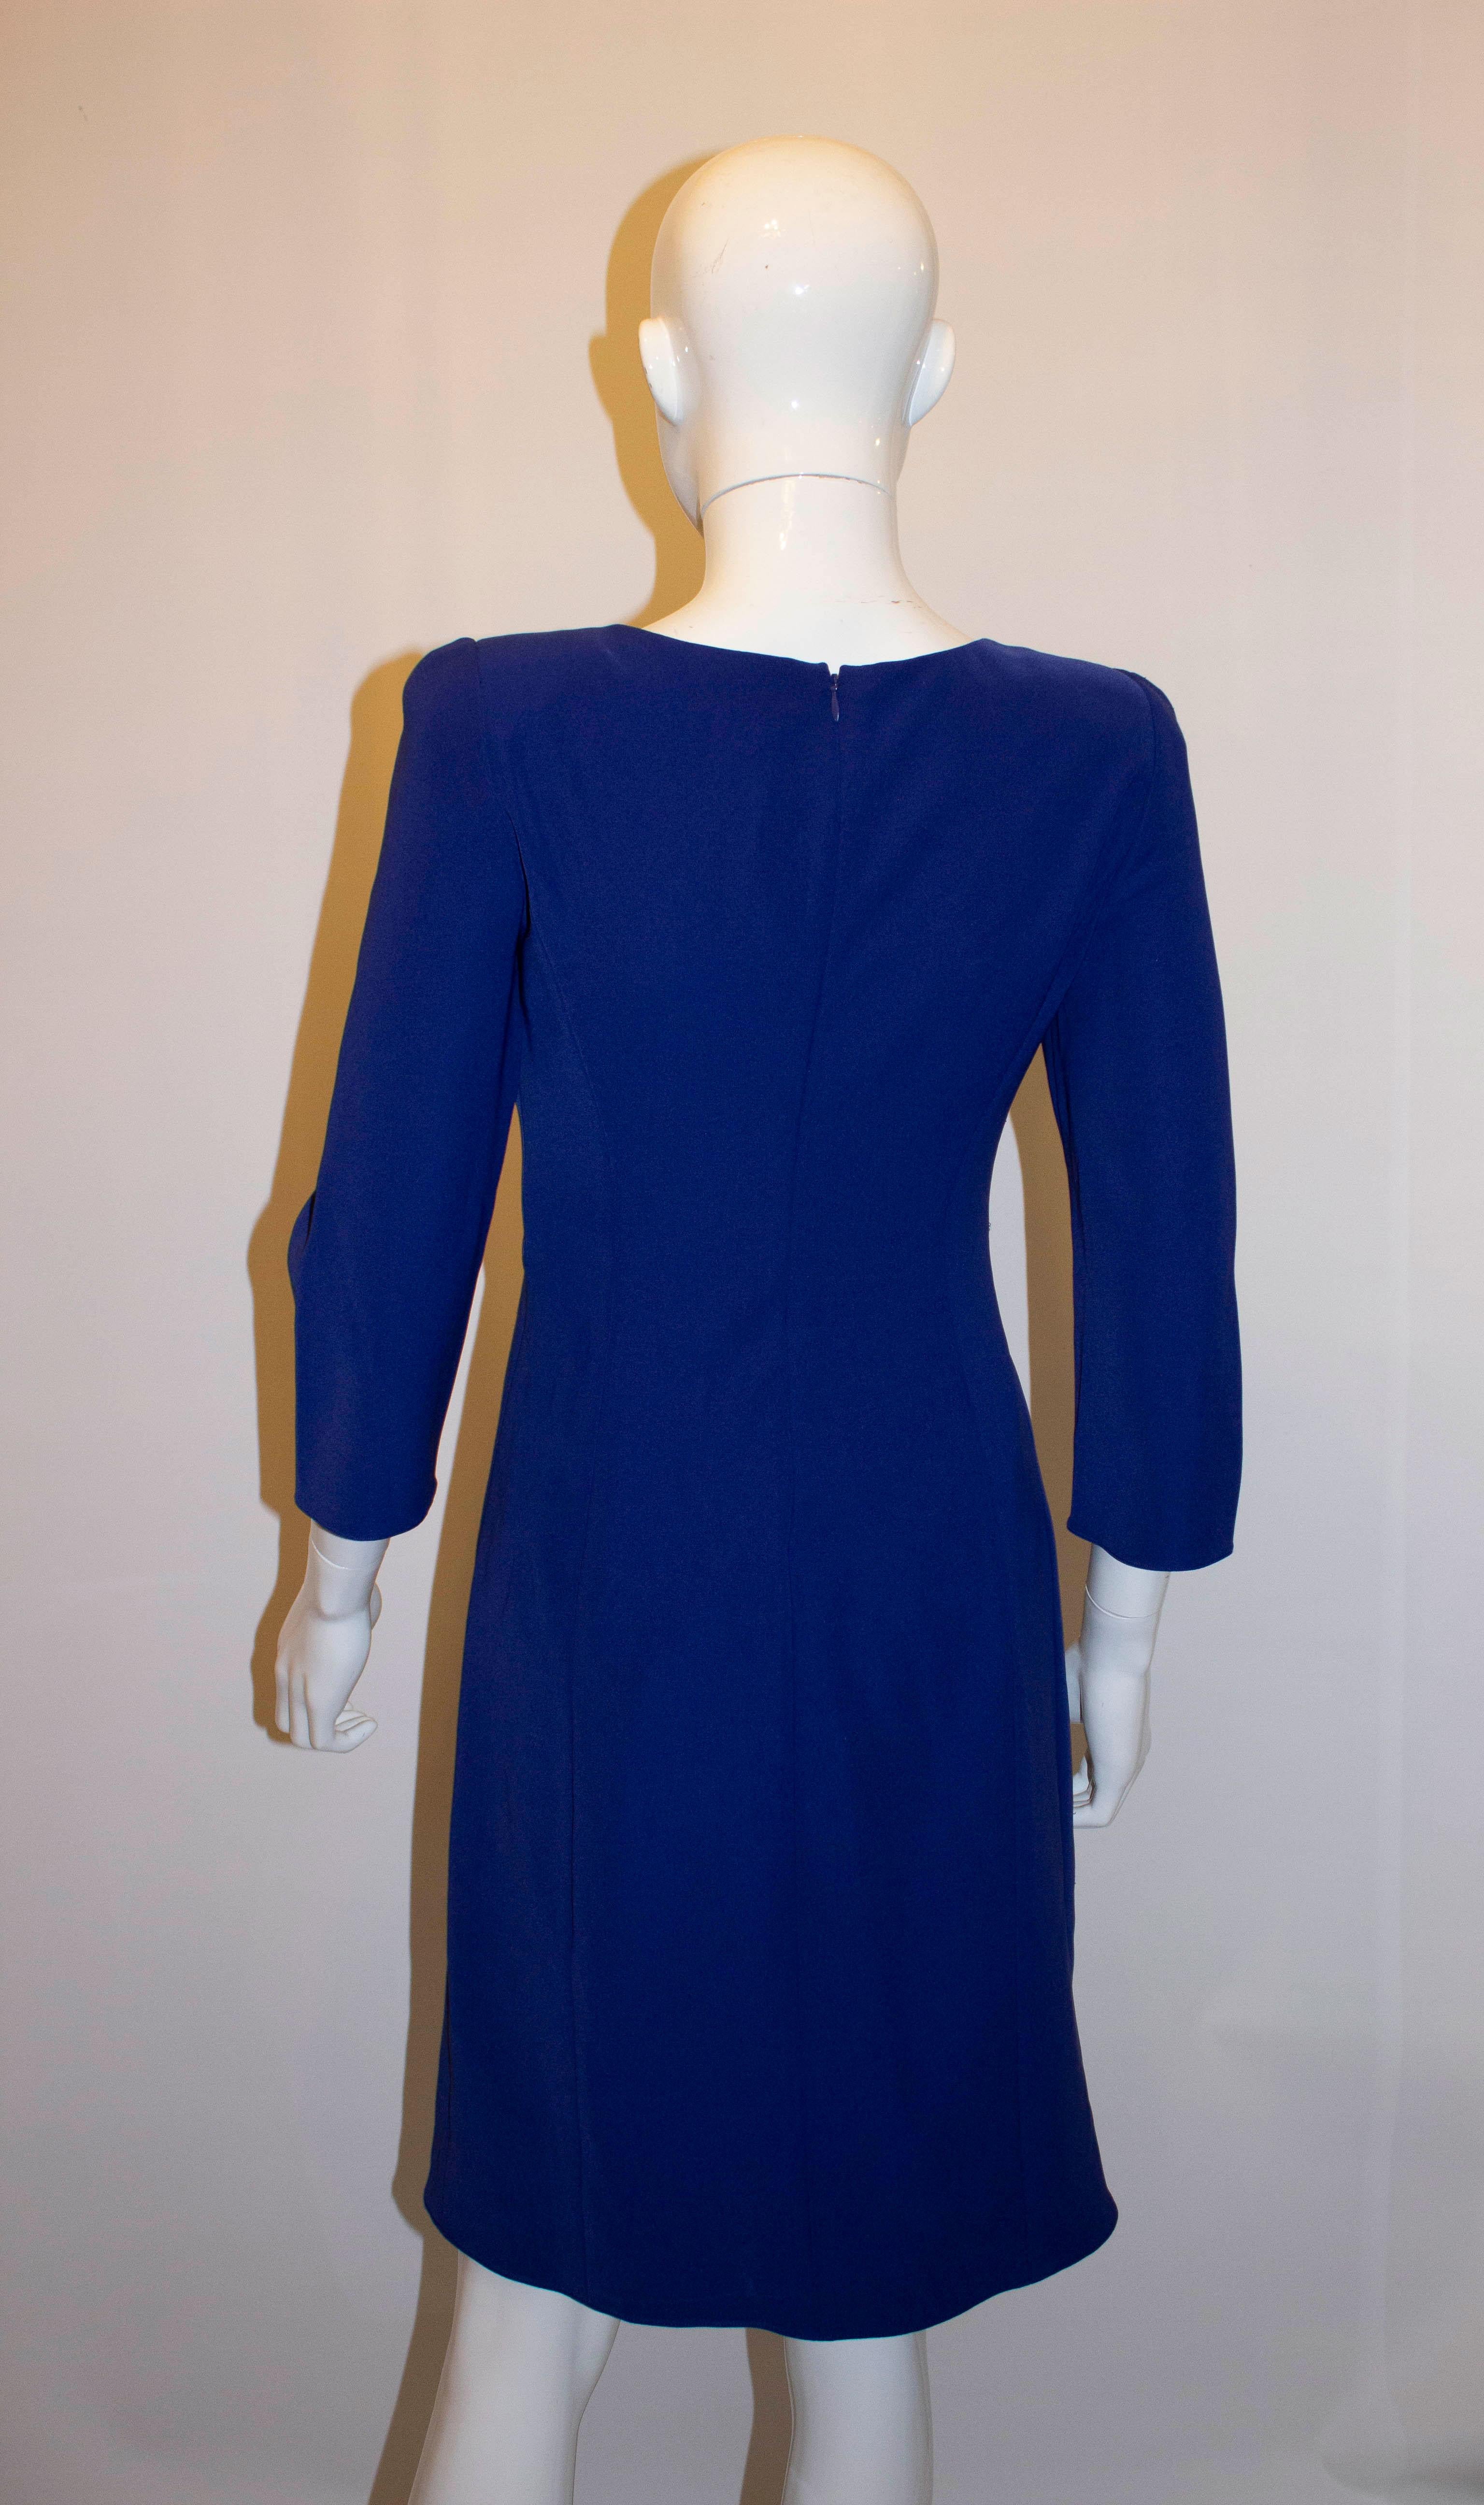 Bleu Armani Colezzioni - Robe de cocktail bleue en vente